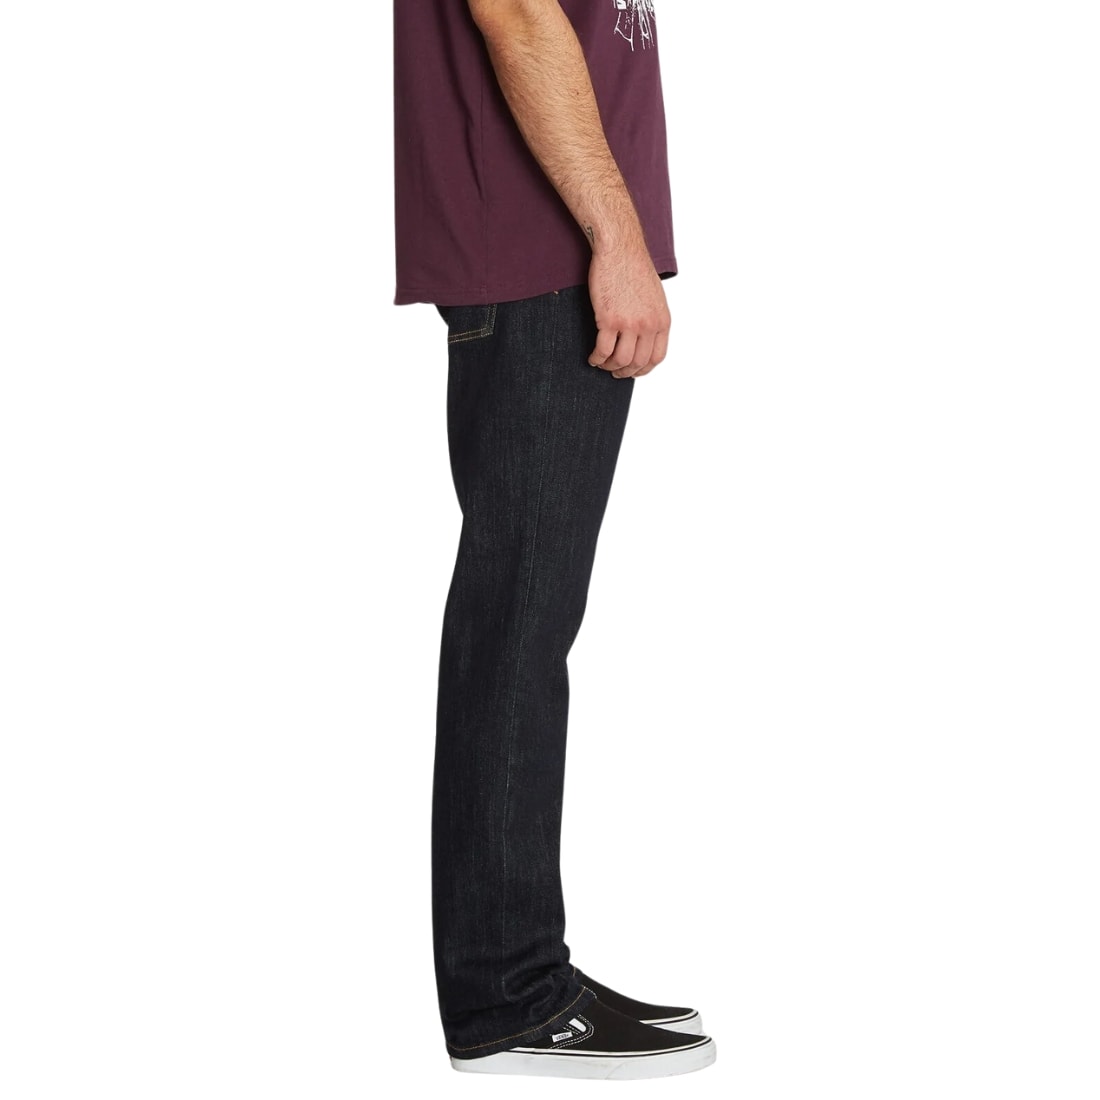 Volcom Solver Denim - Rinse - Mens Regular/Straight Denim Jeans by Volcom